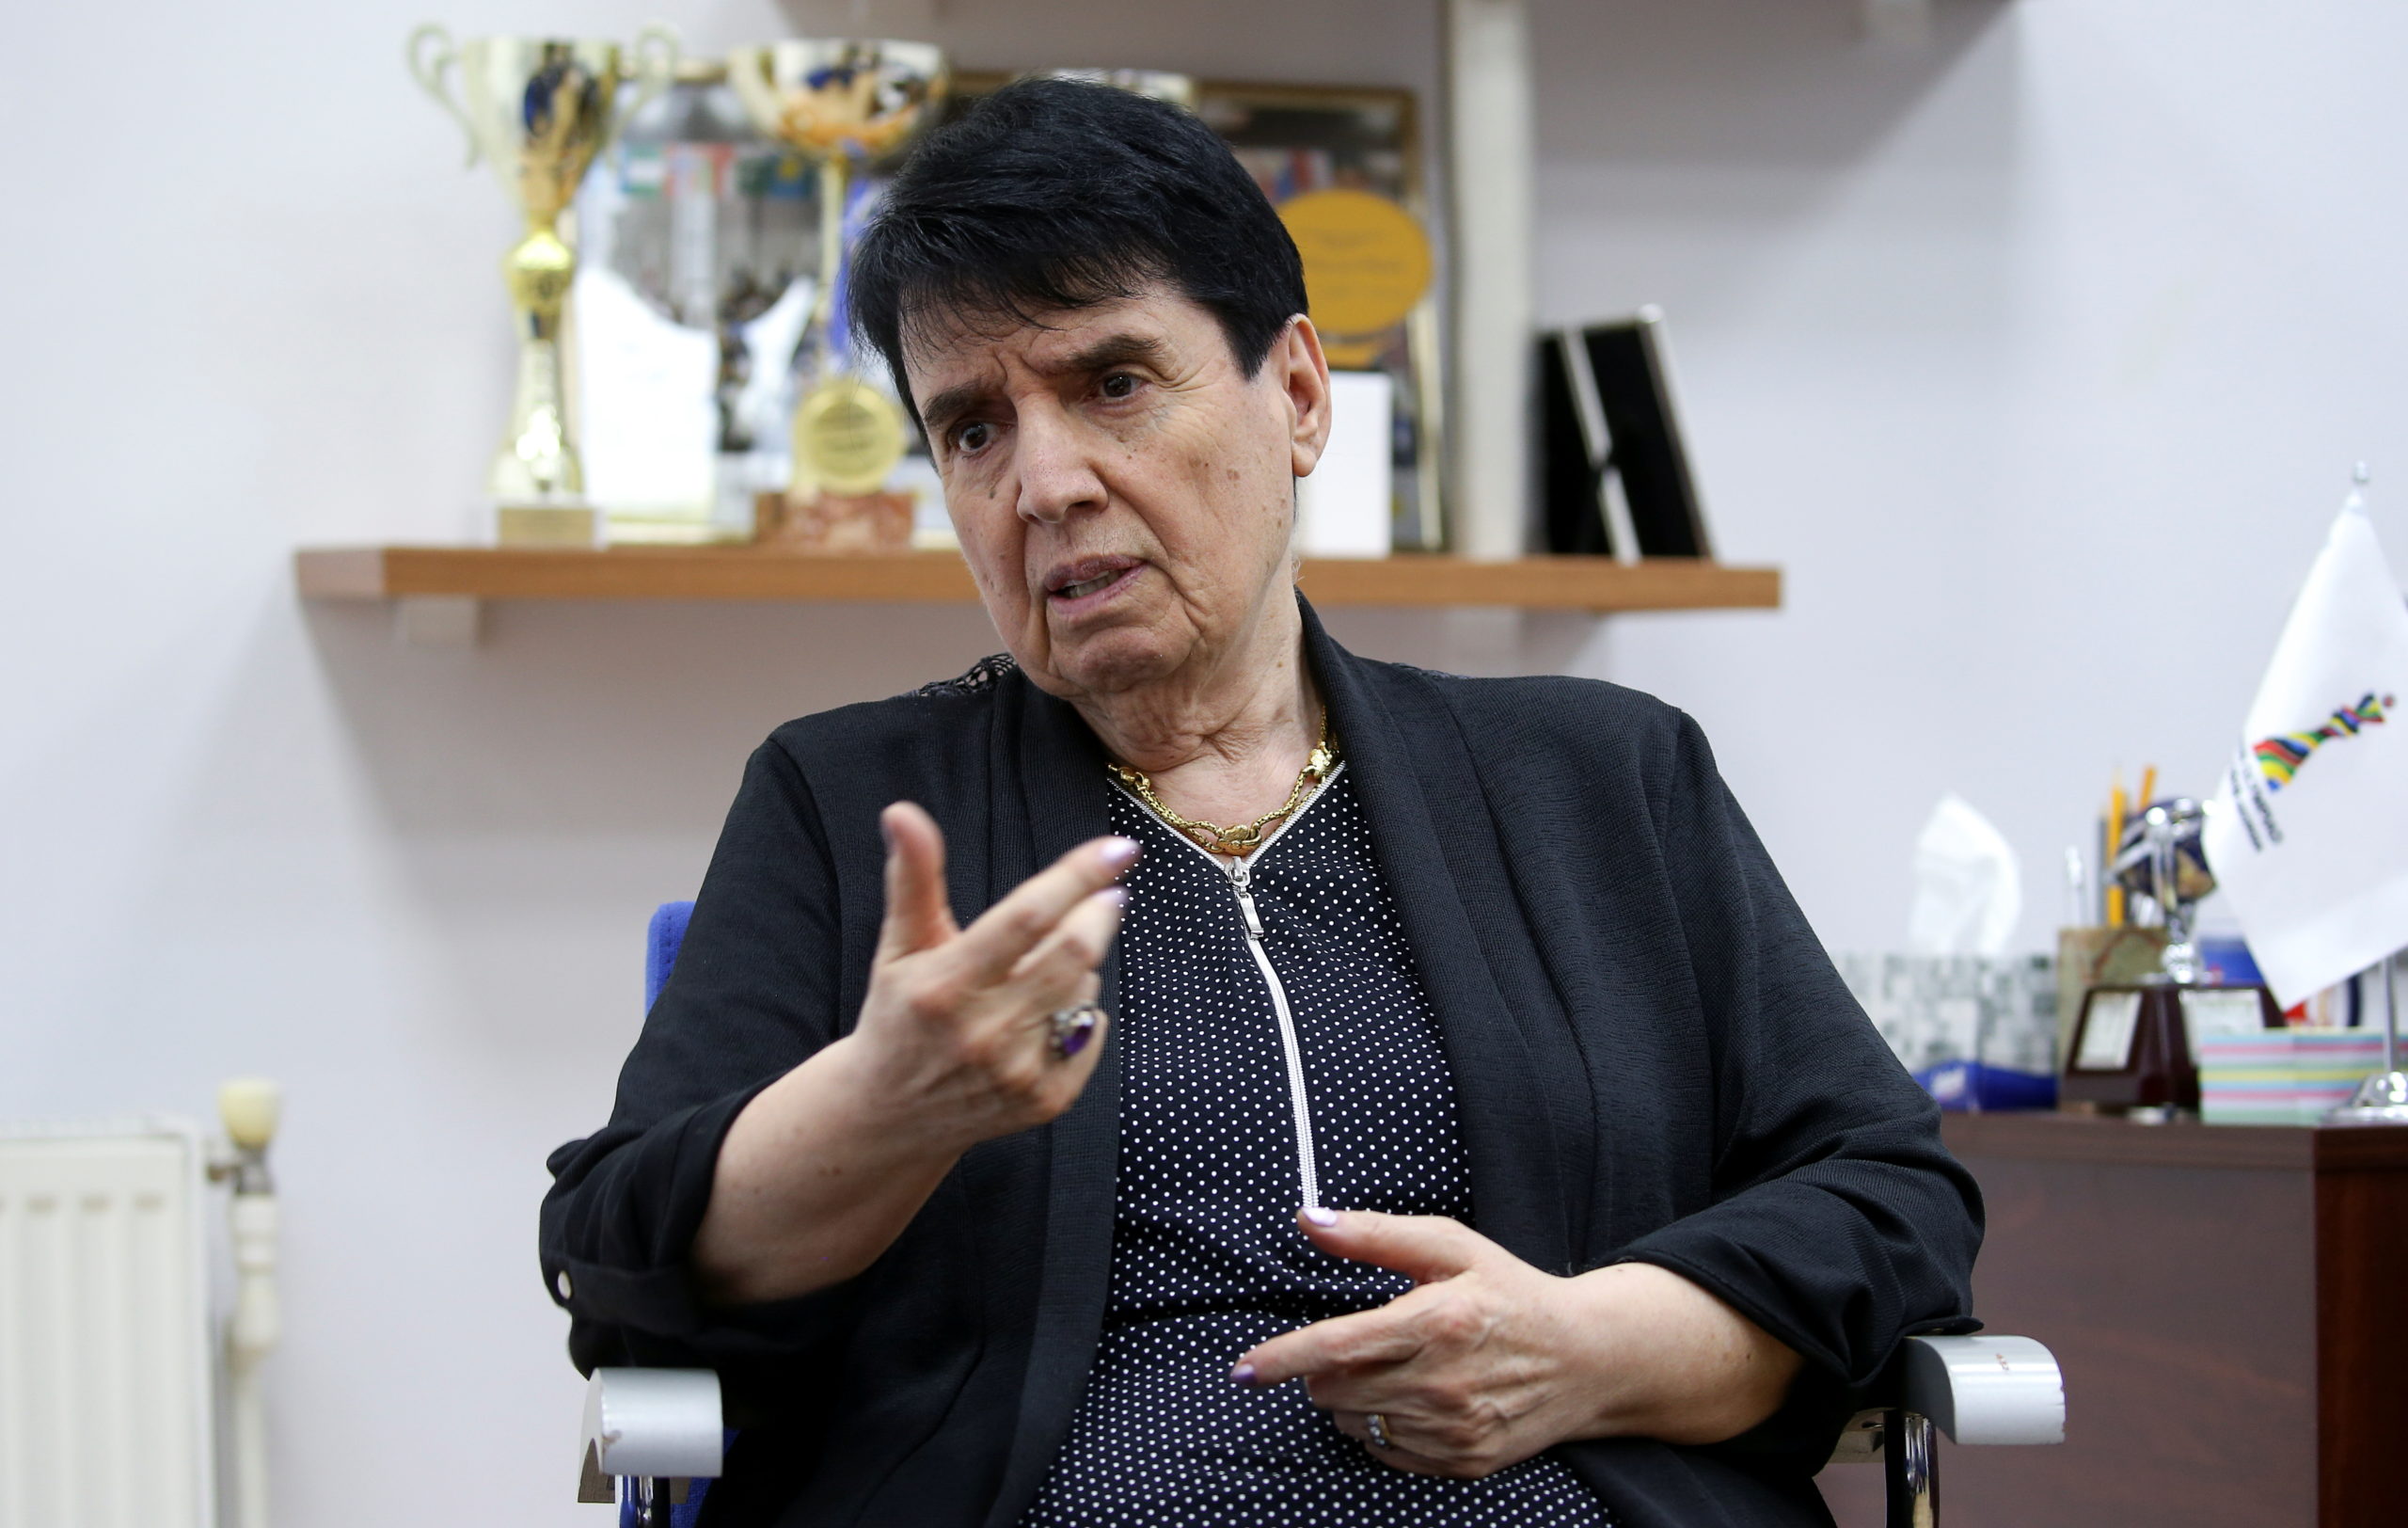 Nona Gaprindashvili, a Soviet-era chess grandmaster from Georgia, speaks during an interview in Tbilisi, Georgia May 10, 2019. REUTERS/Irakli Ge